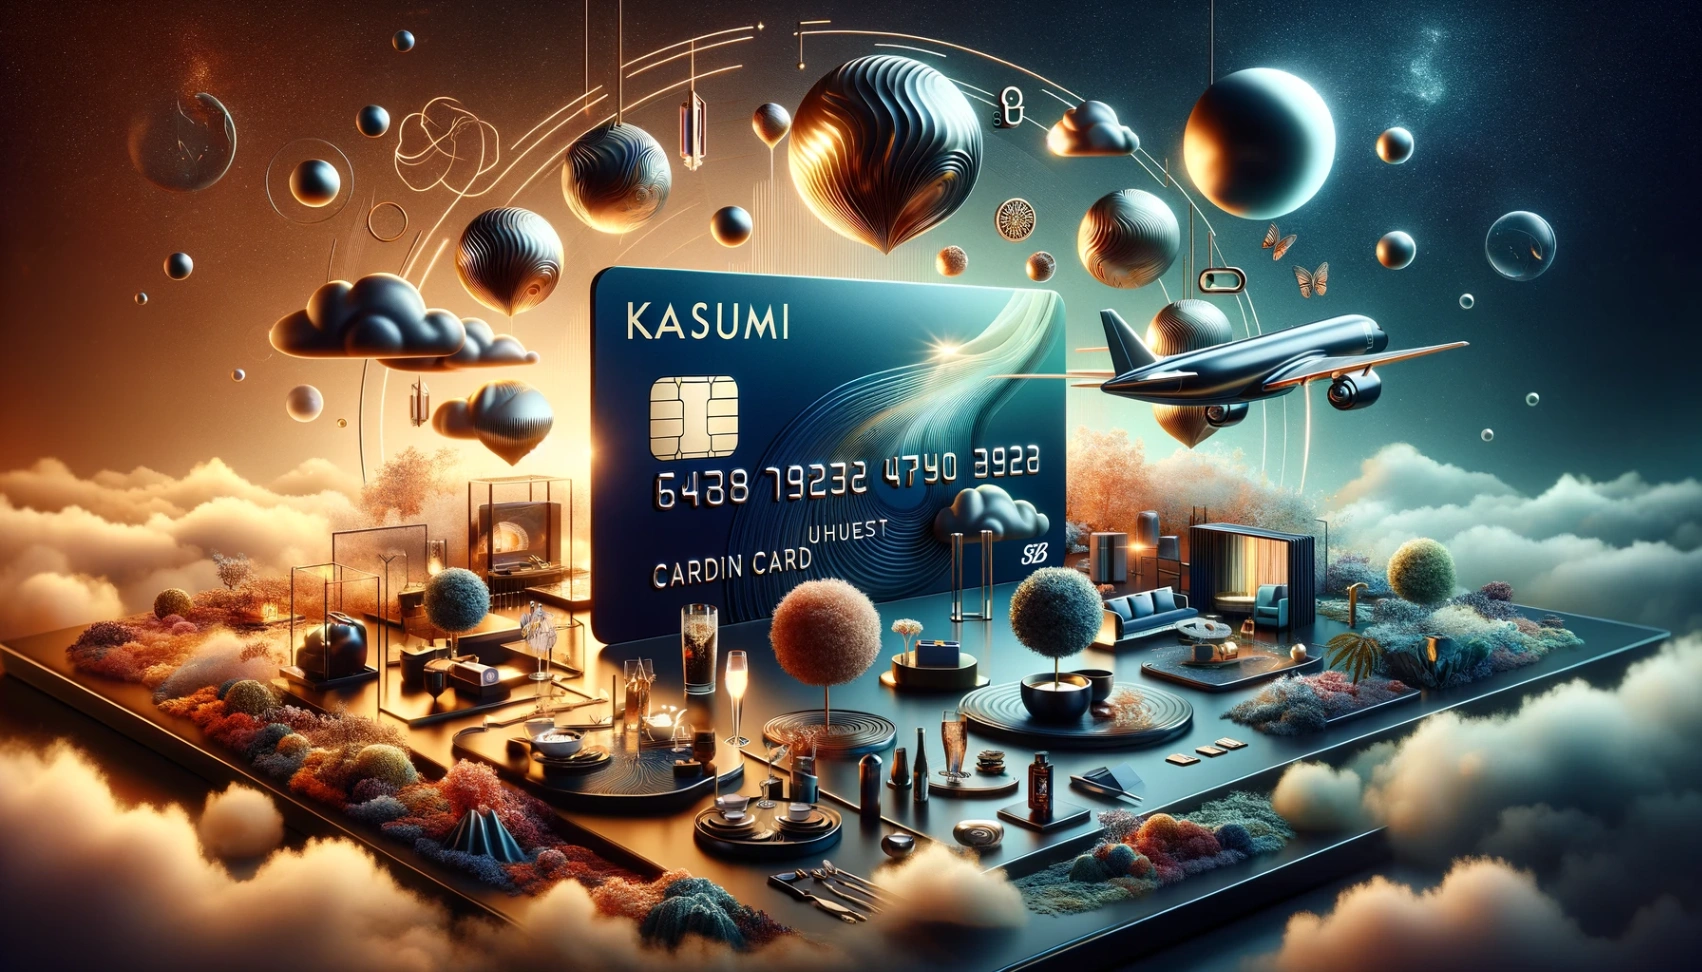 KASUMI クレジットカード - オンライン申し込みの手順ガイド